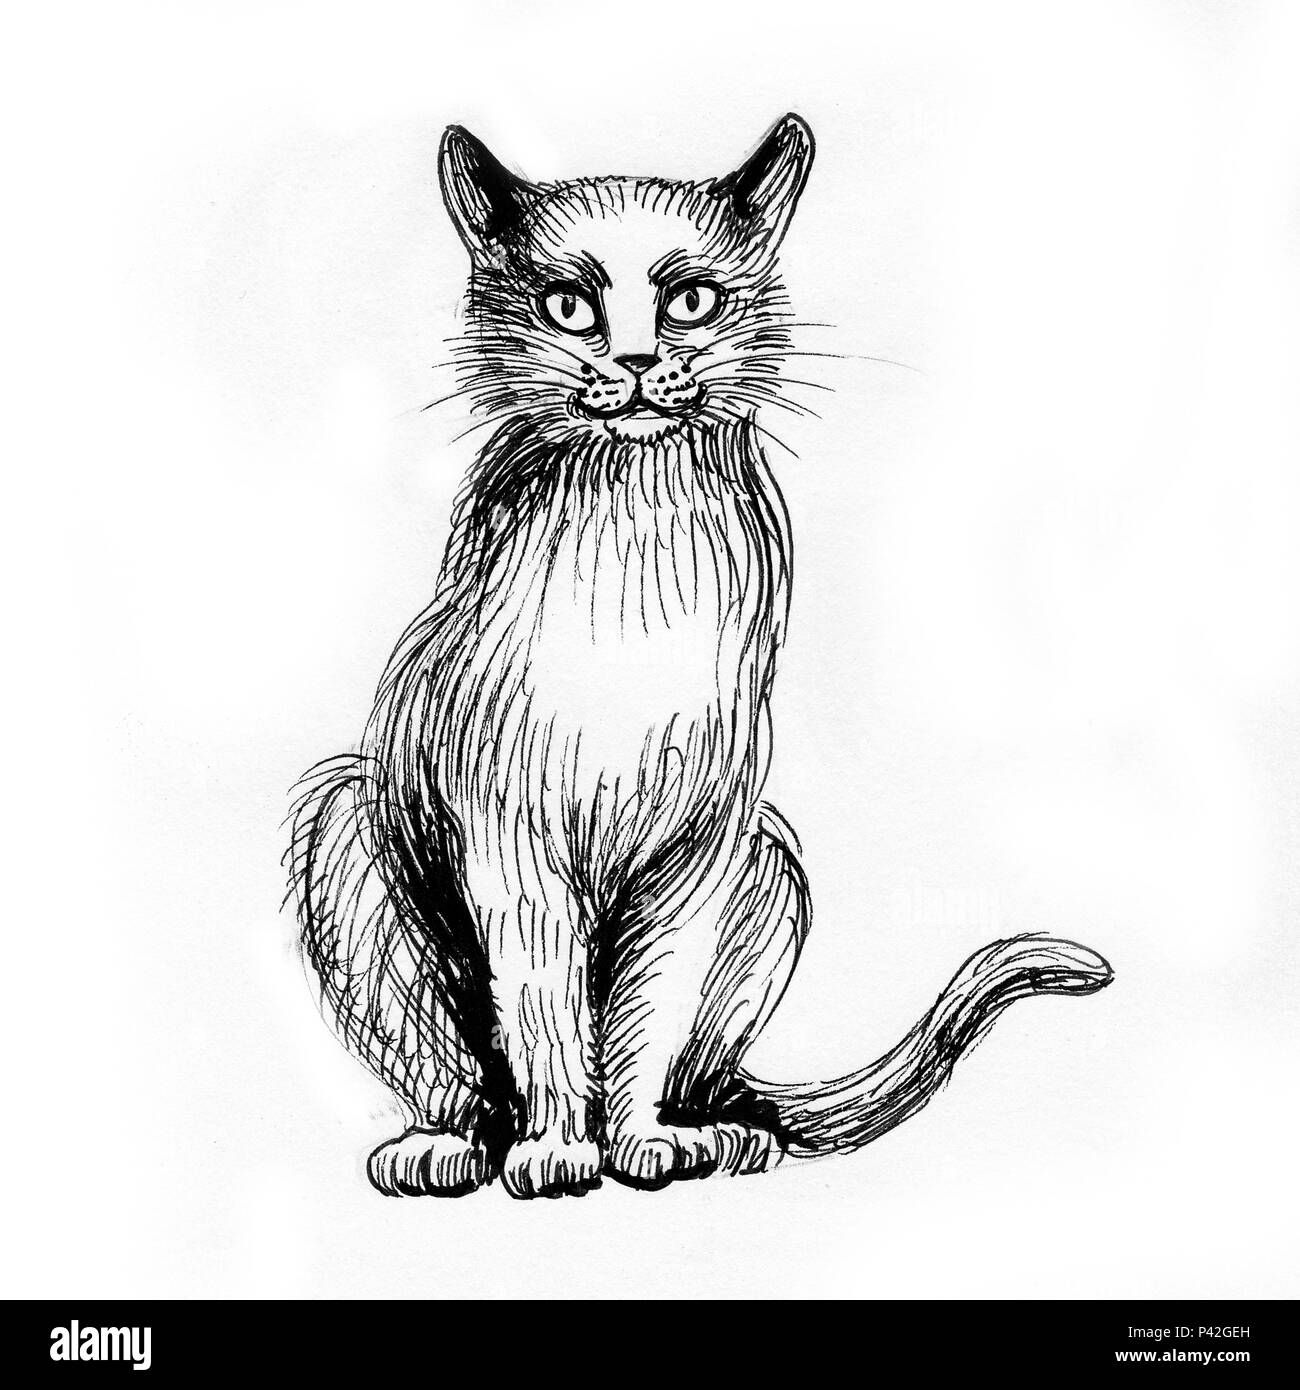 Sitting cat. Ink black and white illustration Stock Photo - Alamy